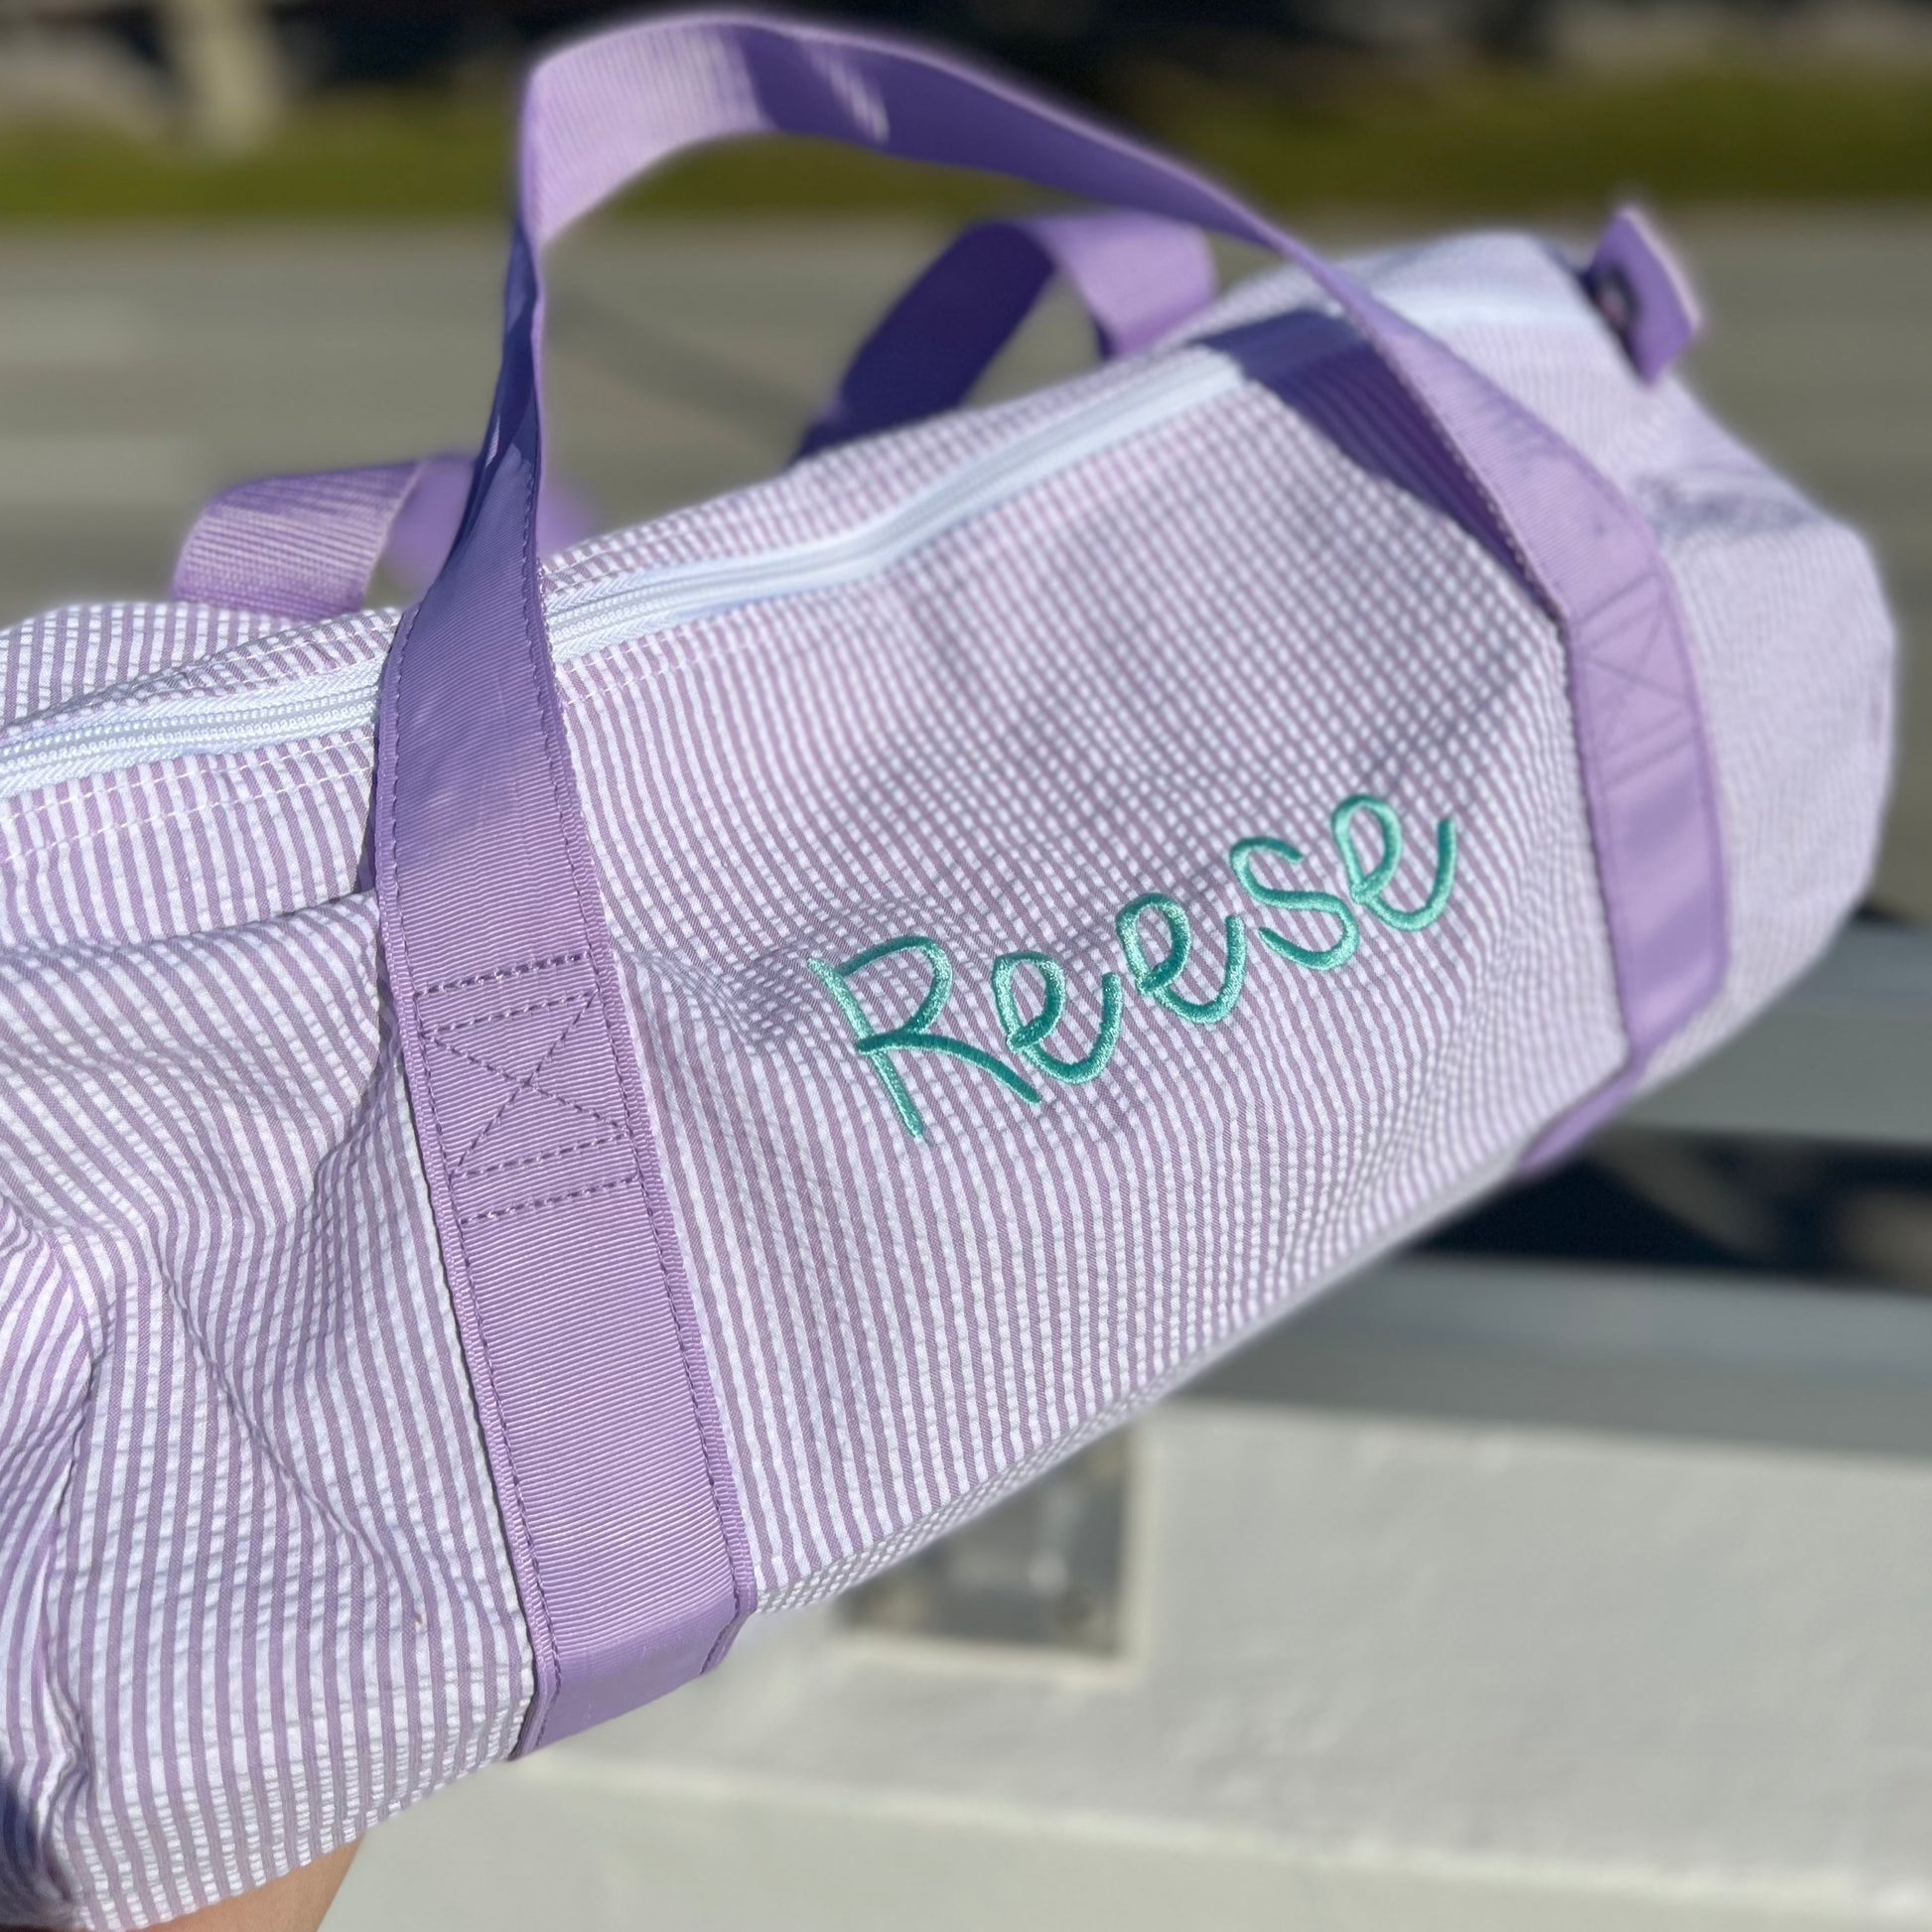 Personalized Seersucker Lilac Duffel Bag - Give Wink